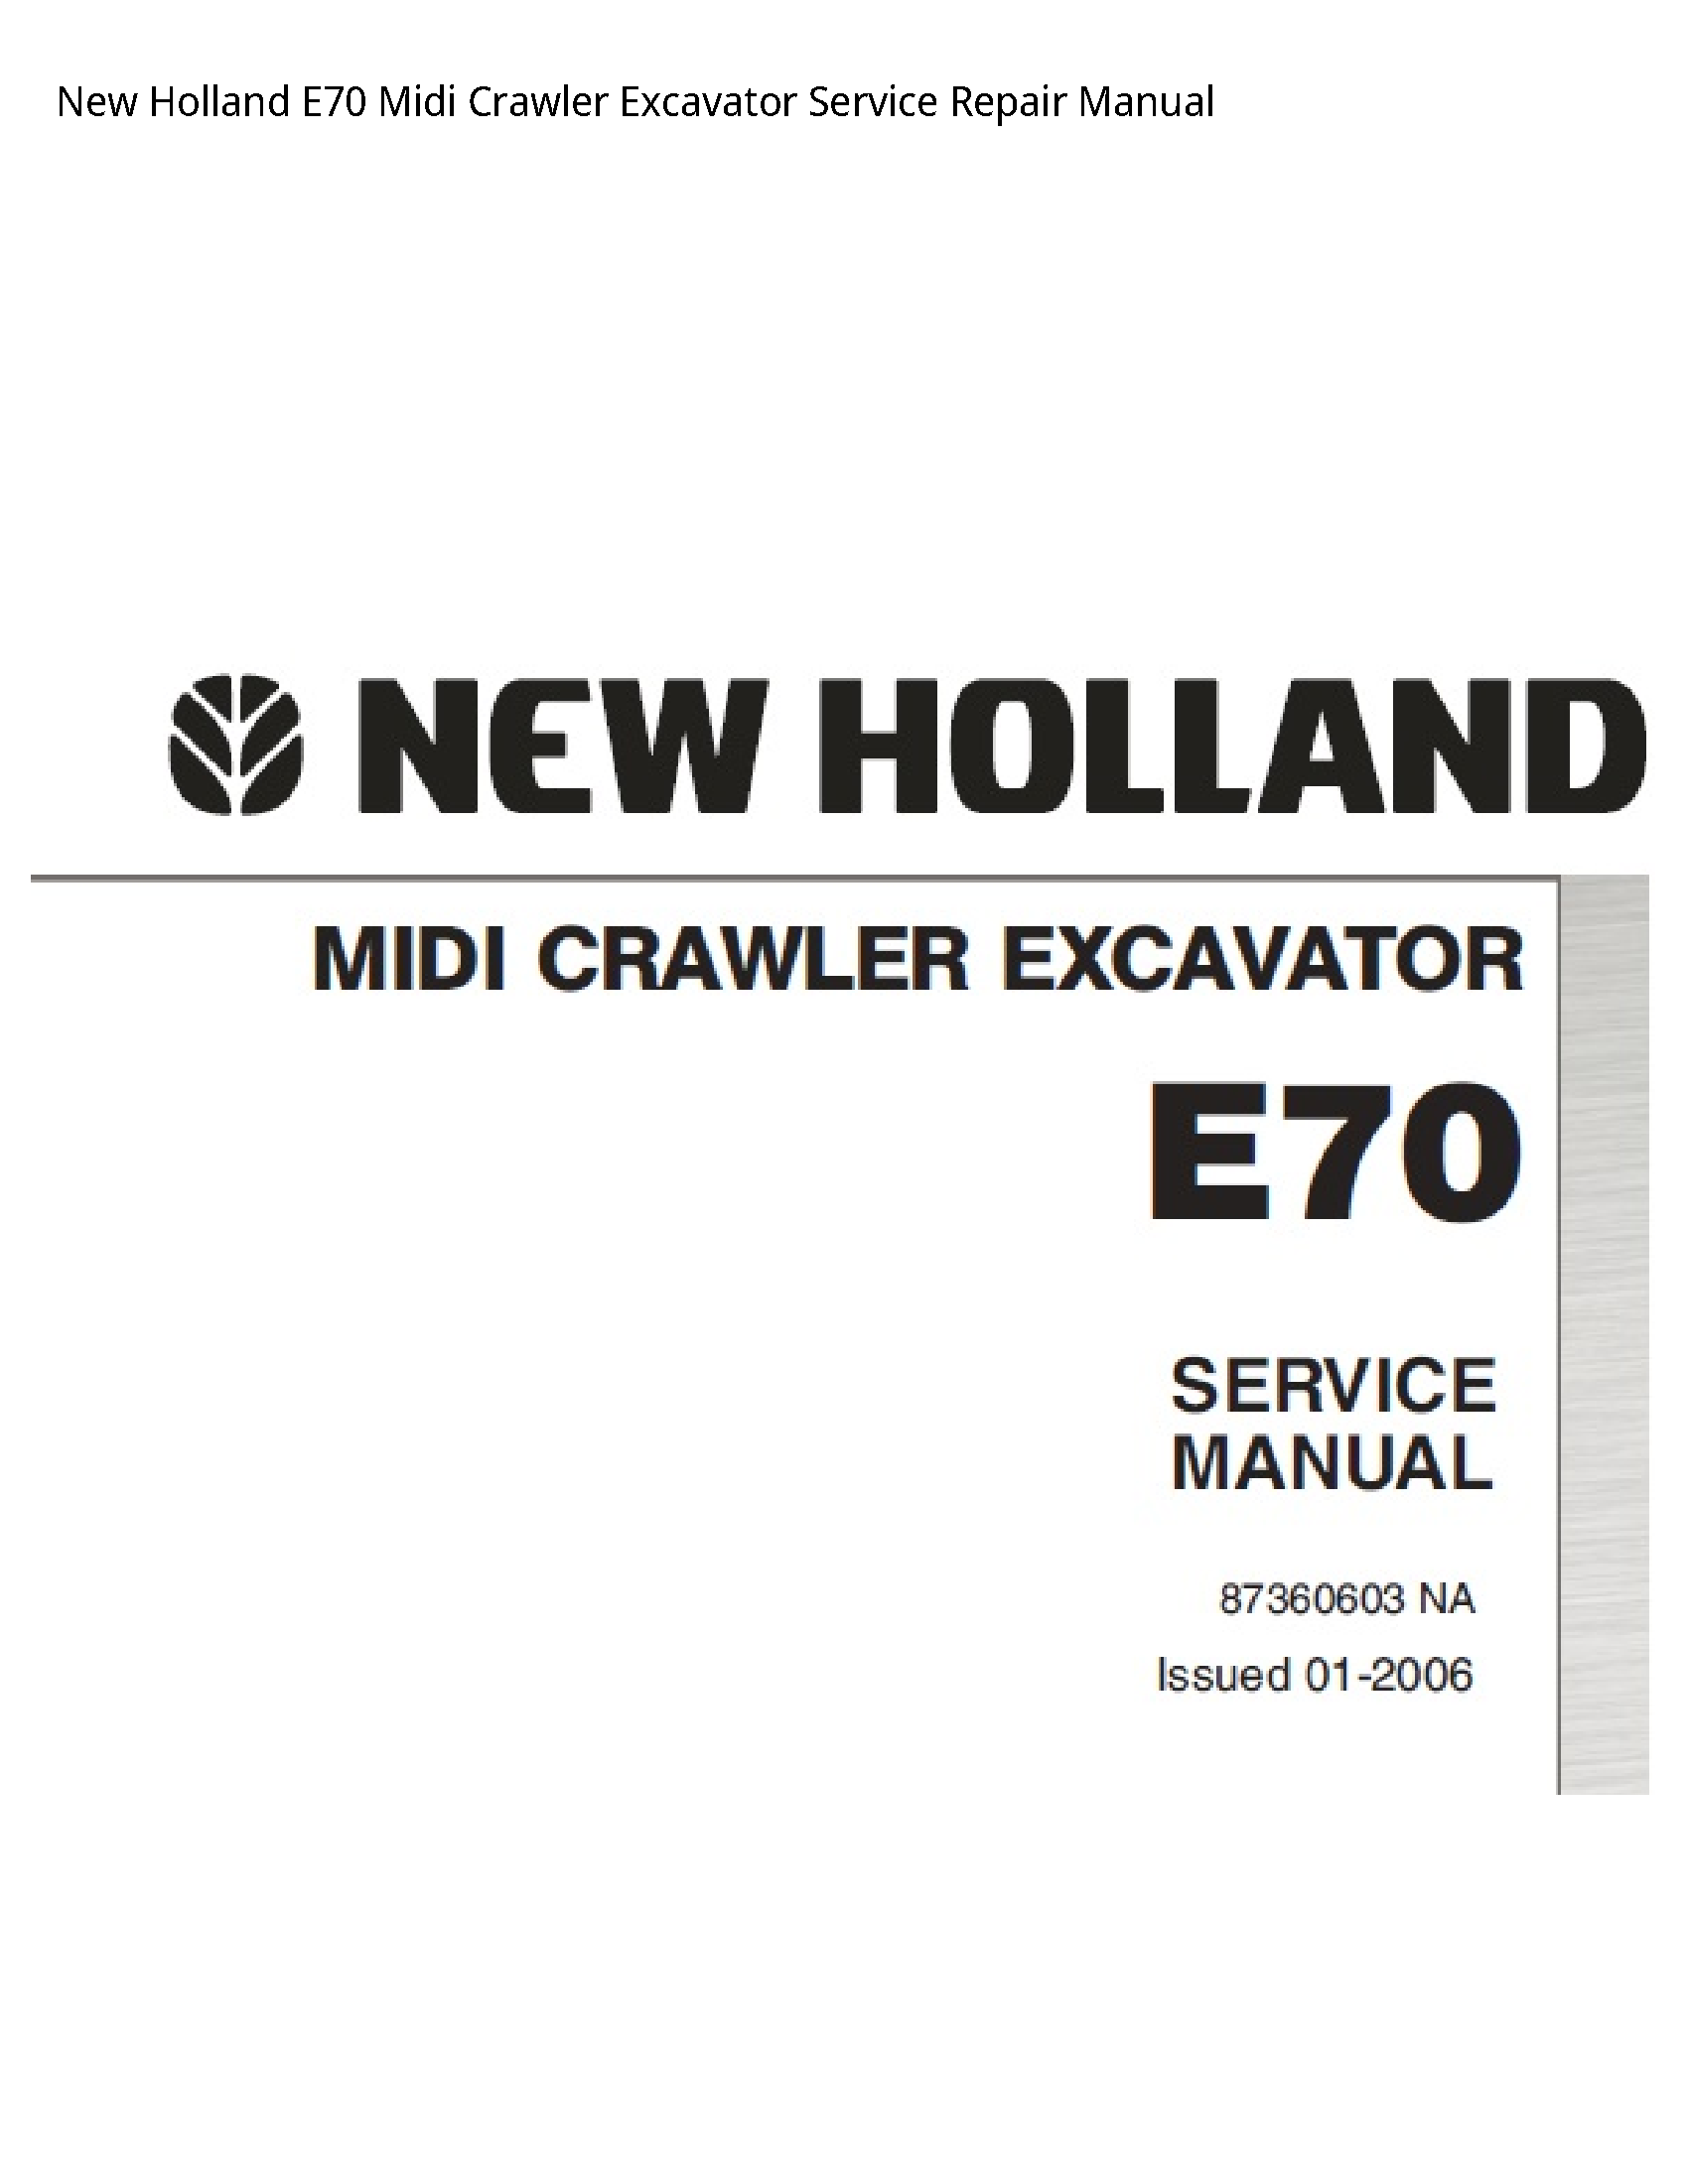 New Holland E70 Midi Crawler Excavator manual